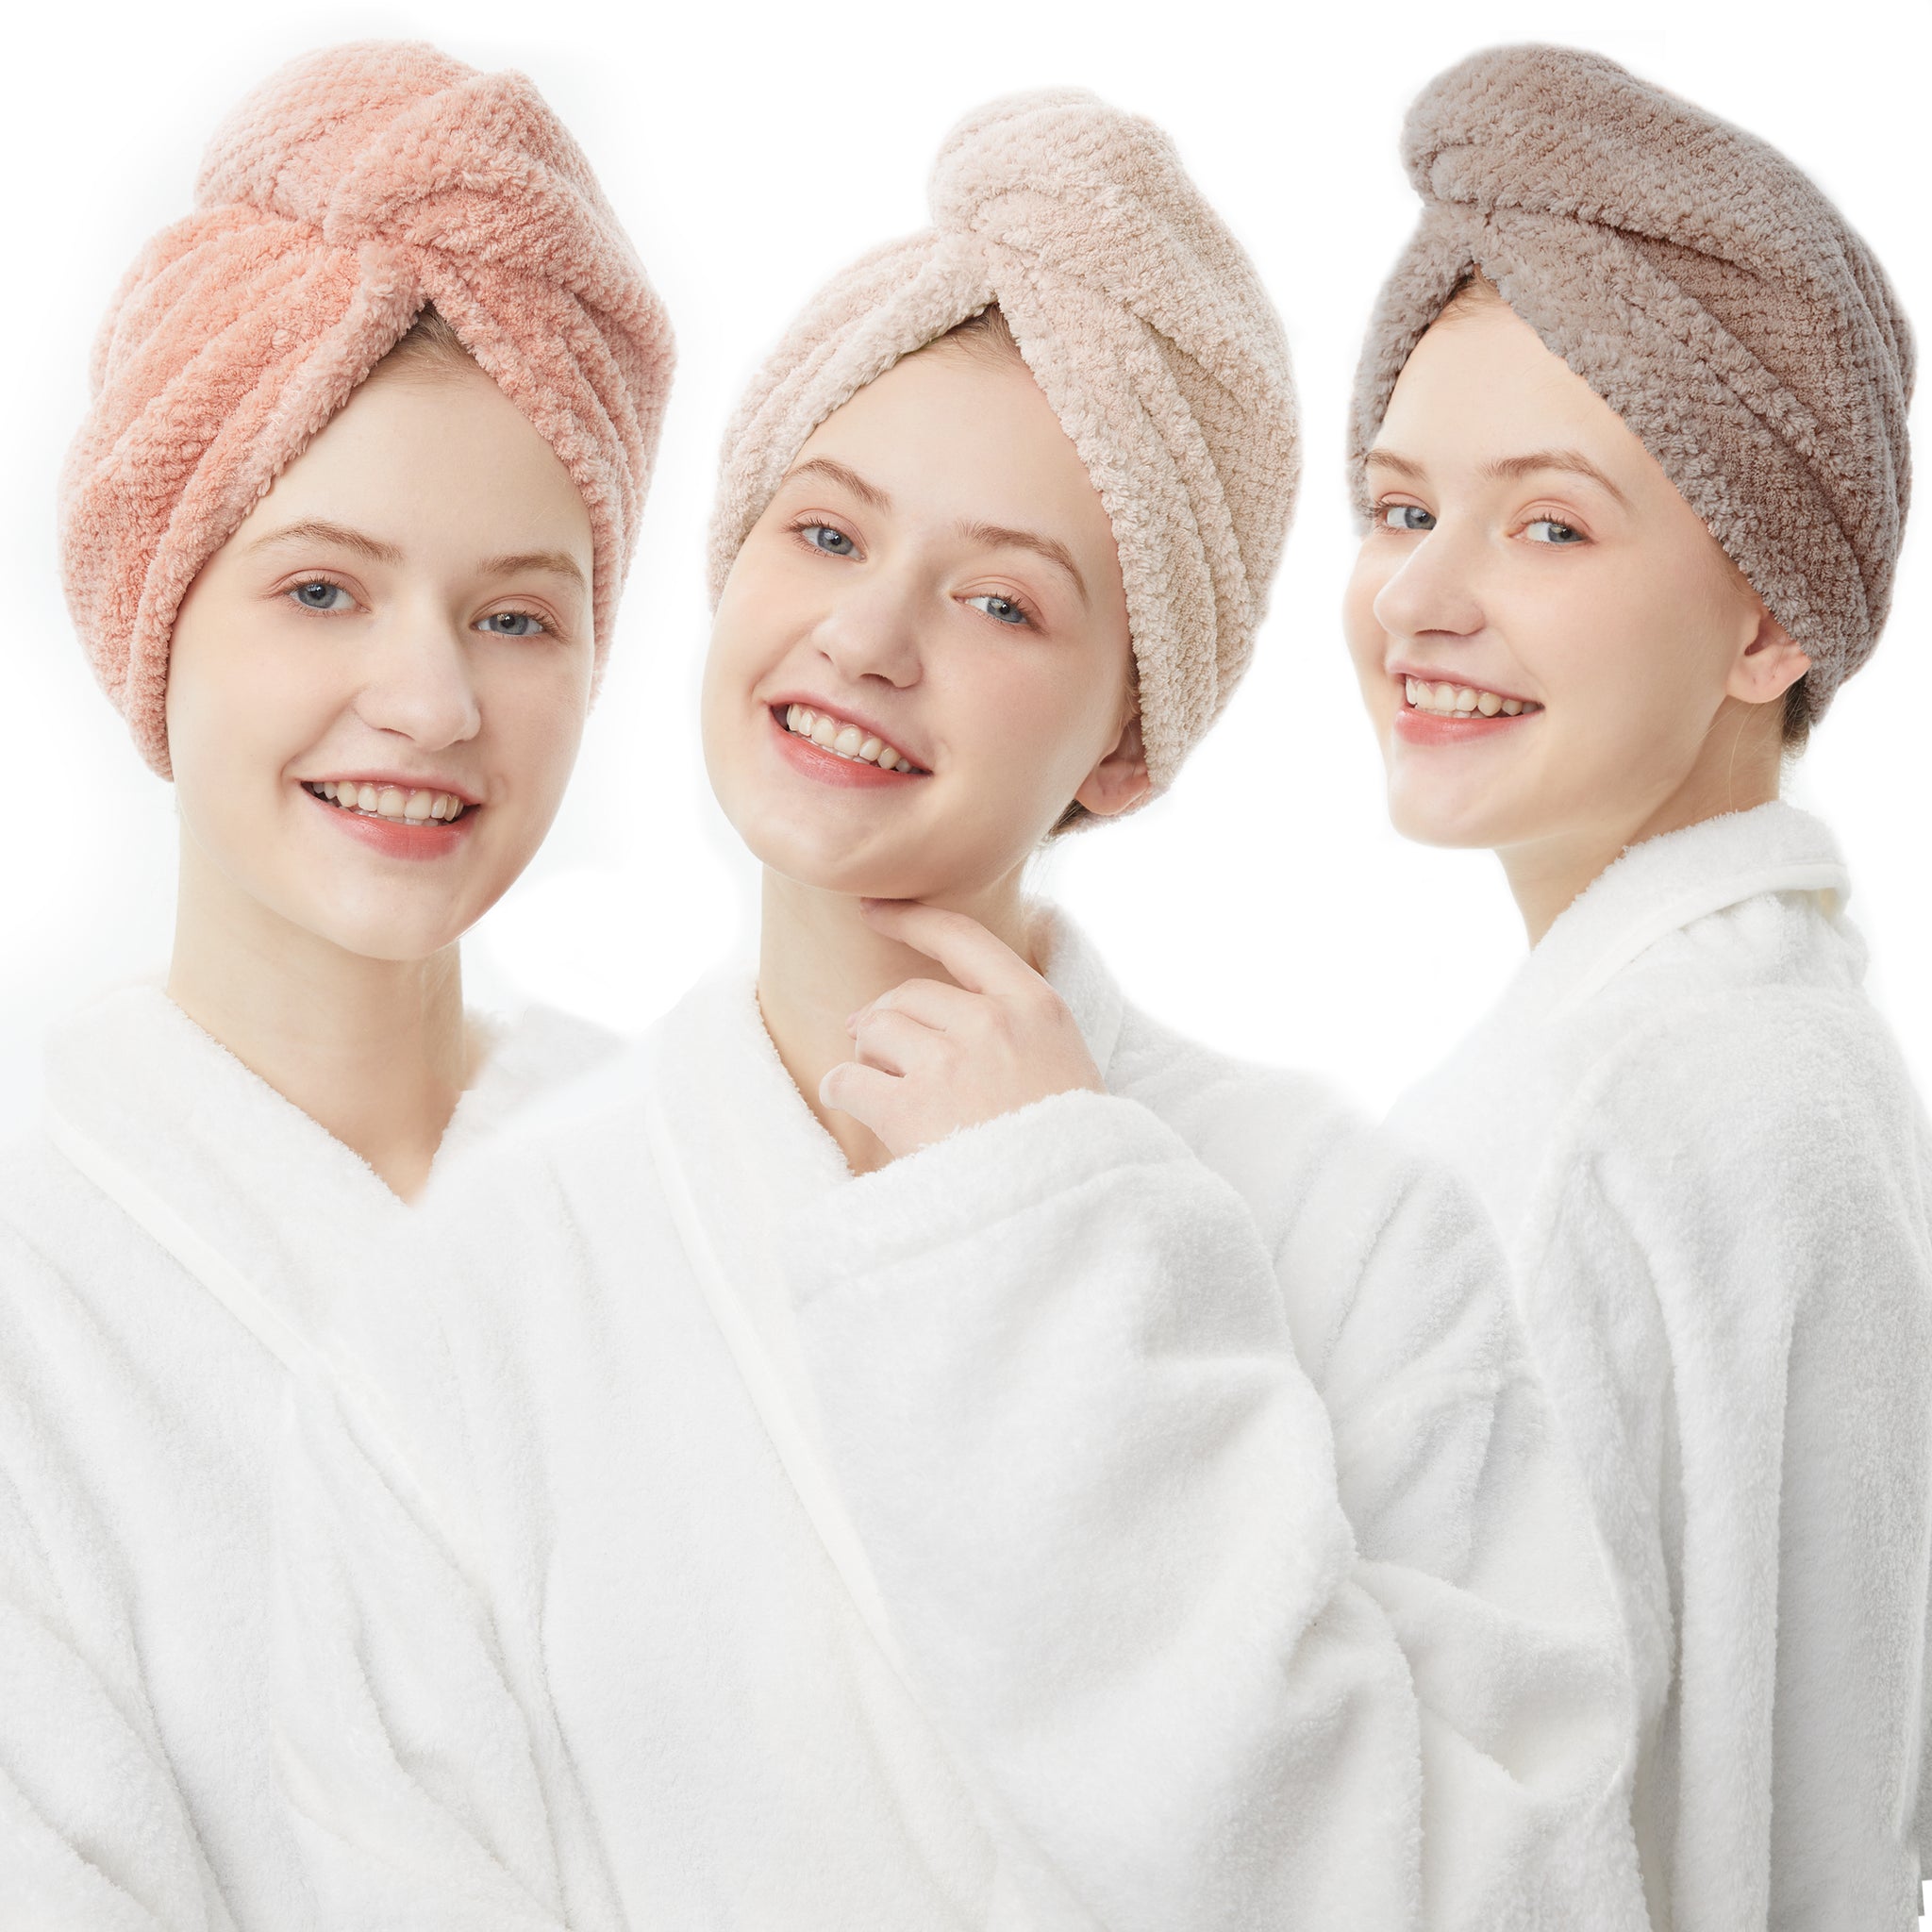 ELLEWIN Hair Towel Wrap 3 Pack, Microfiber Hair Drying Shower Turban w